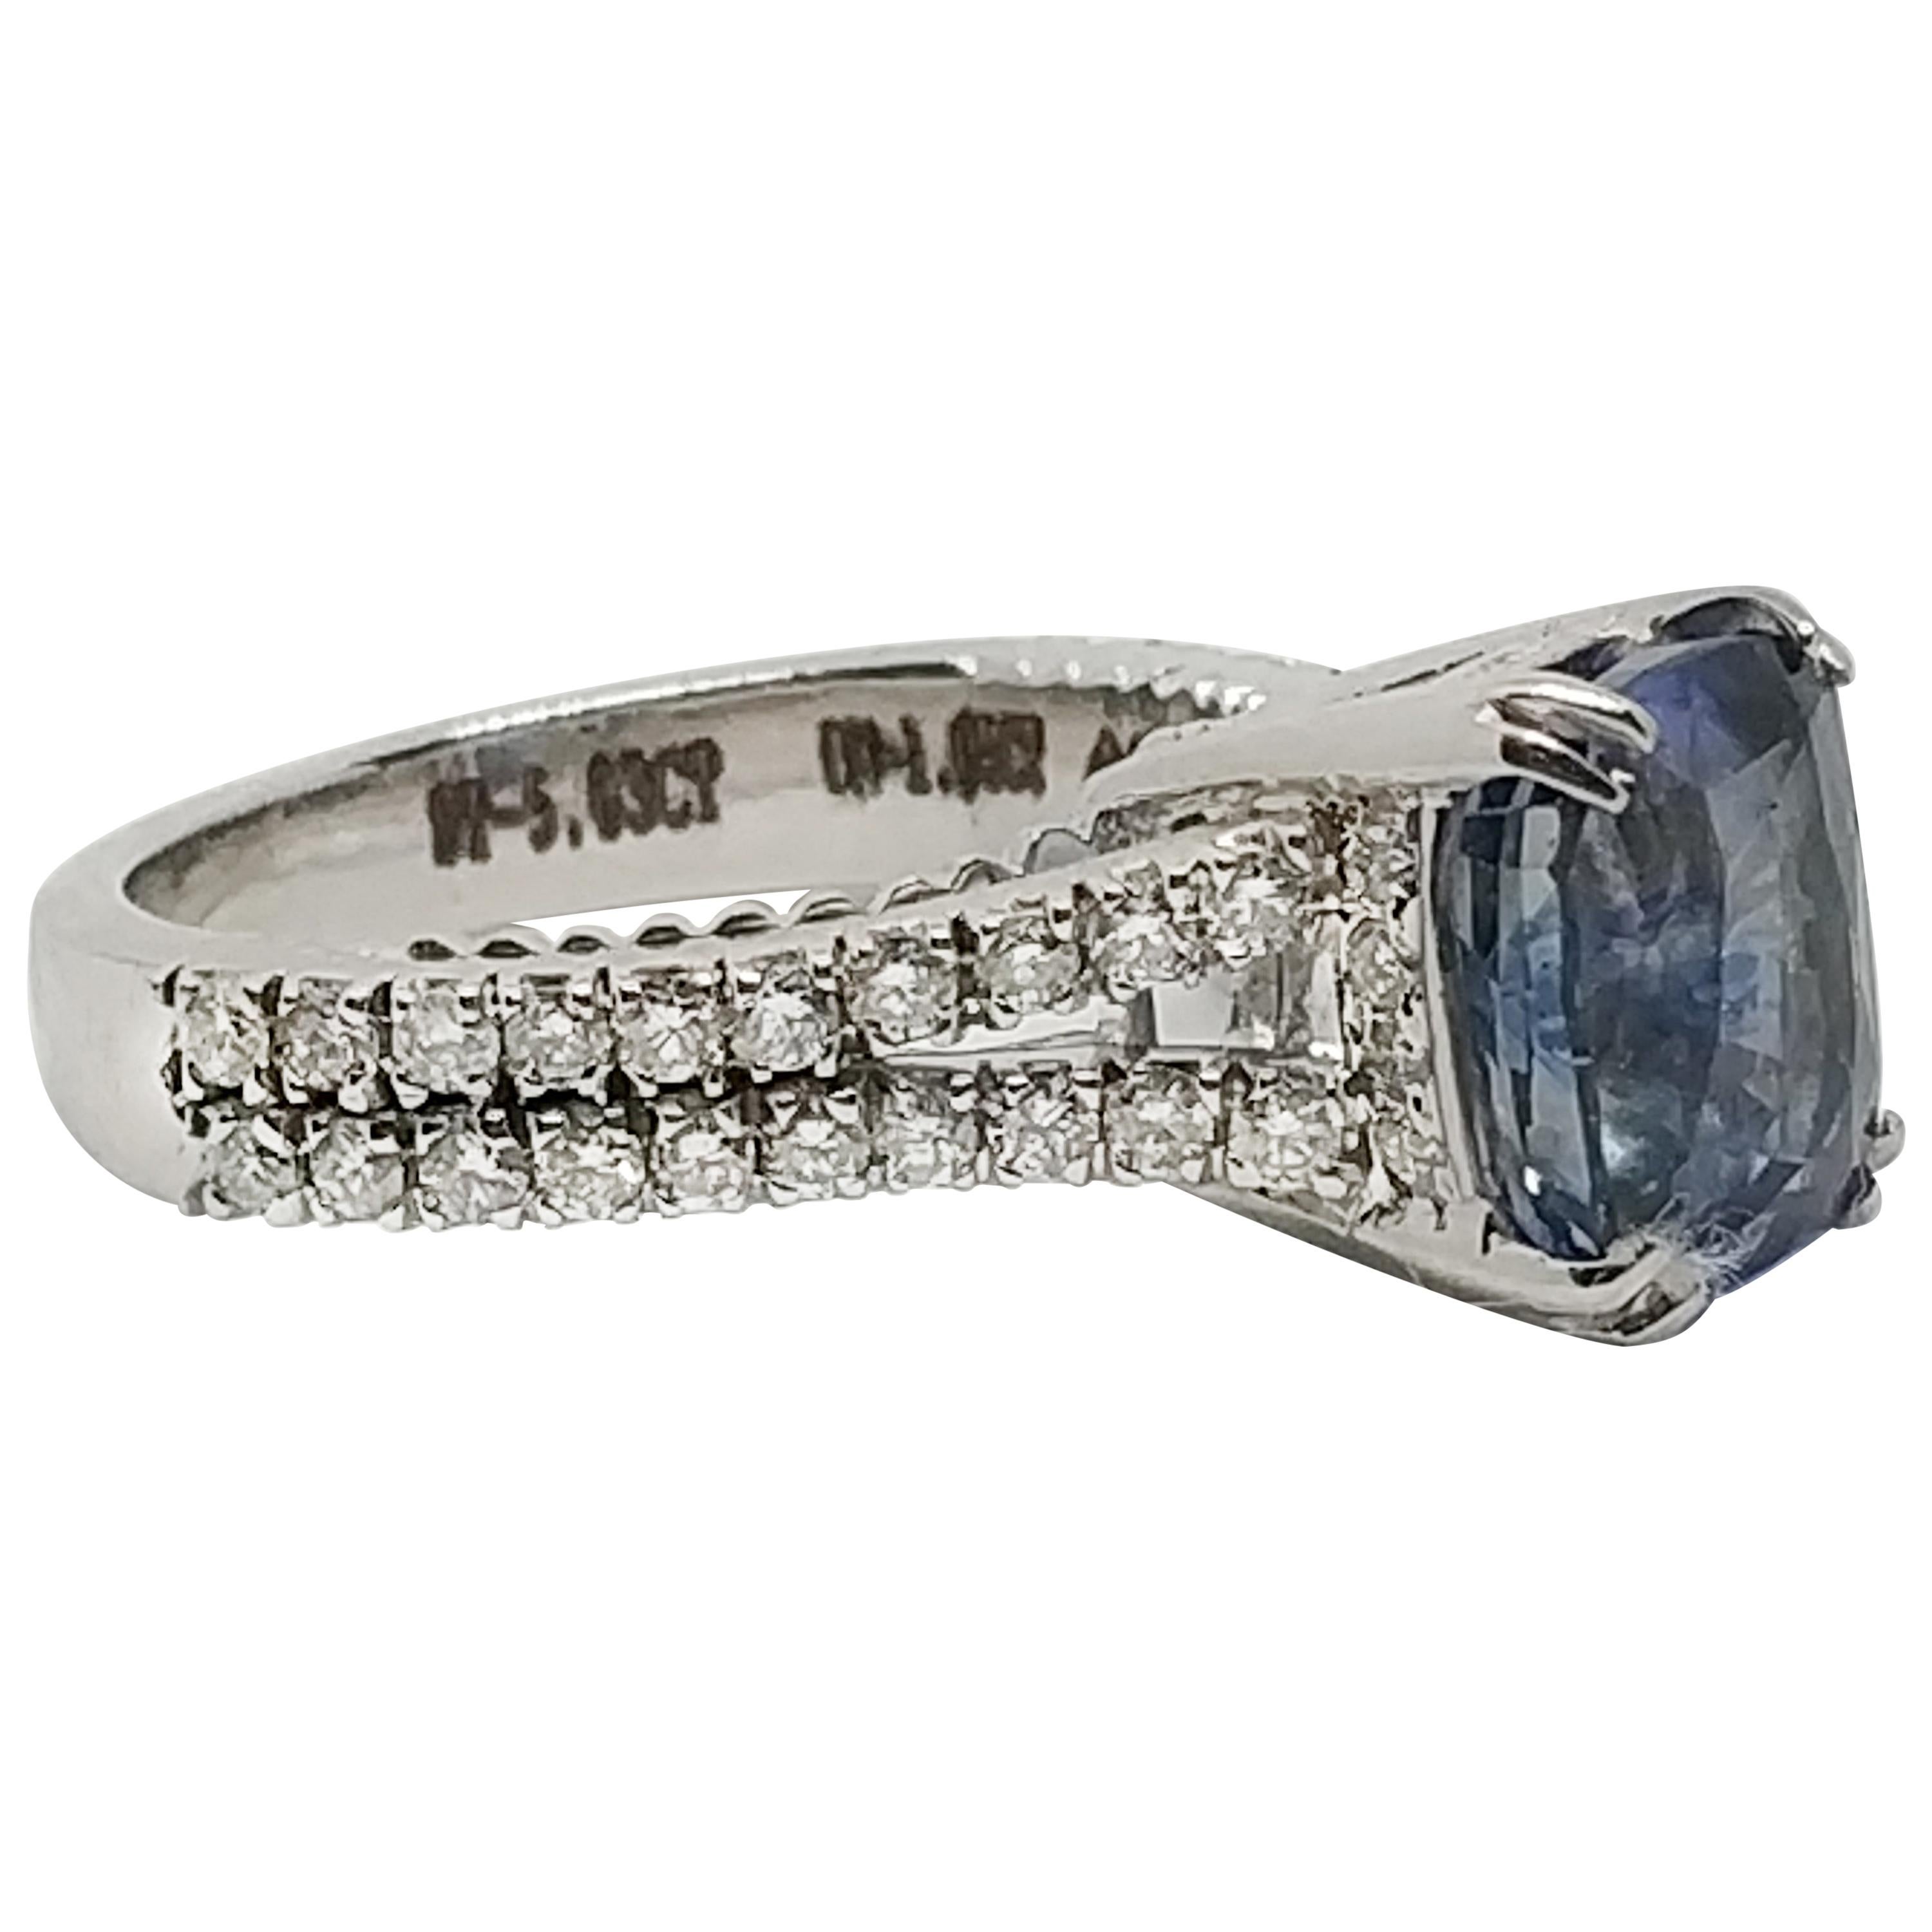 5.03 carat certified untreated blue Ceylon sapphire and
1.05 carat diamond
in 18 carat white gold

